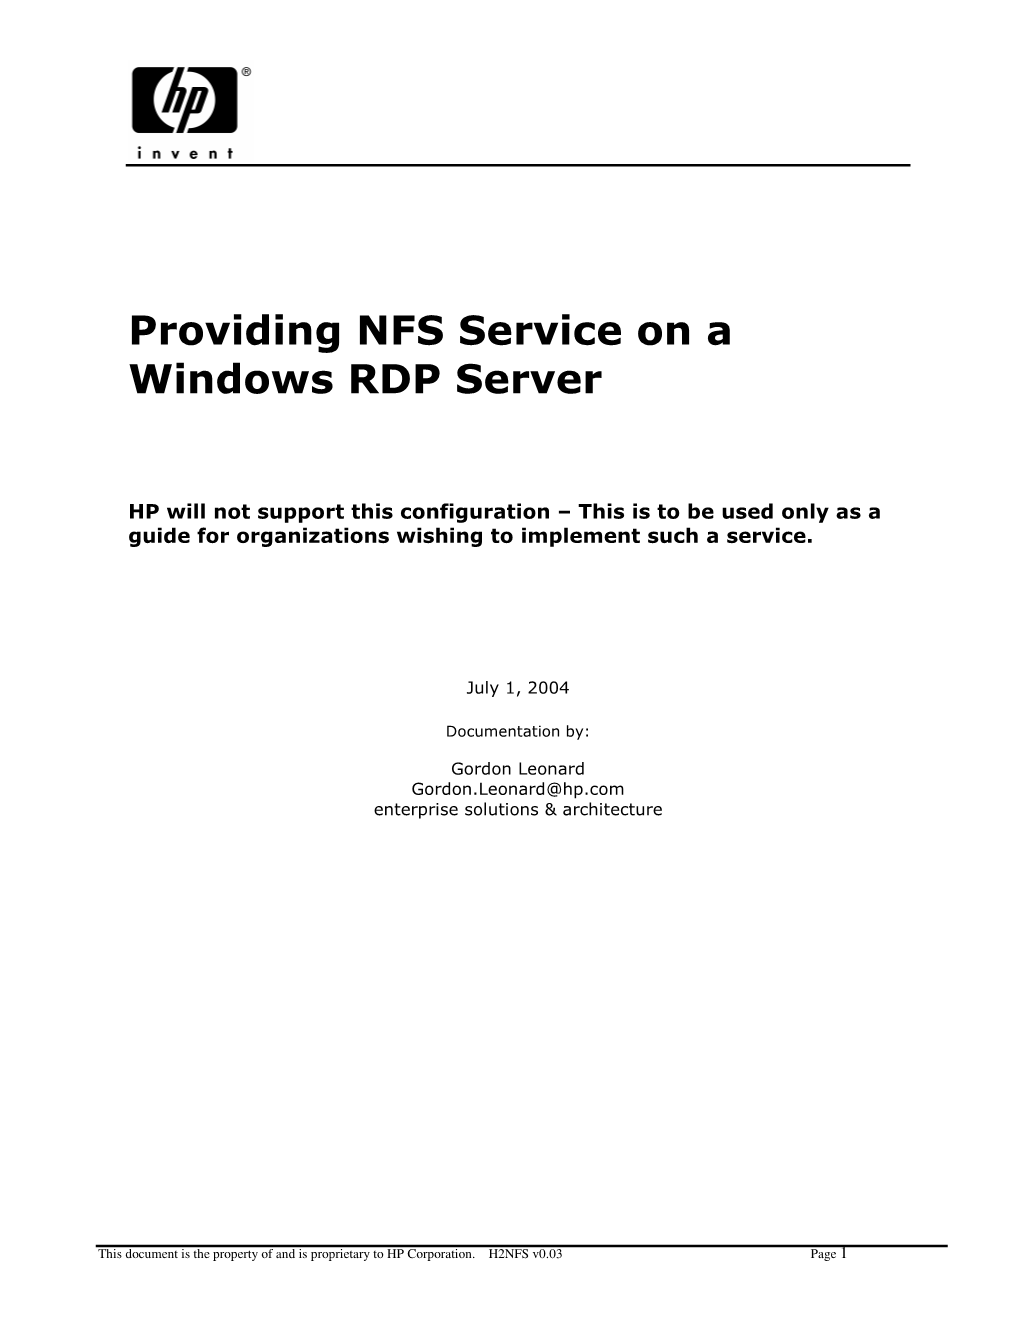 Providing NFS Service on a Windows RDP Server